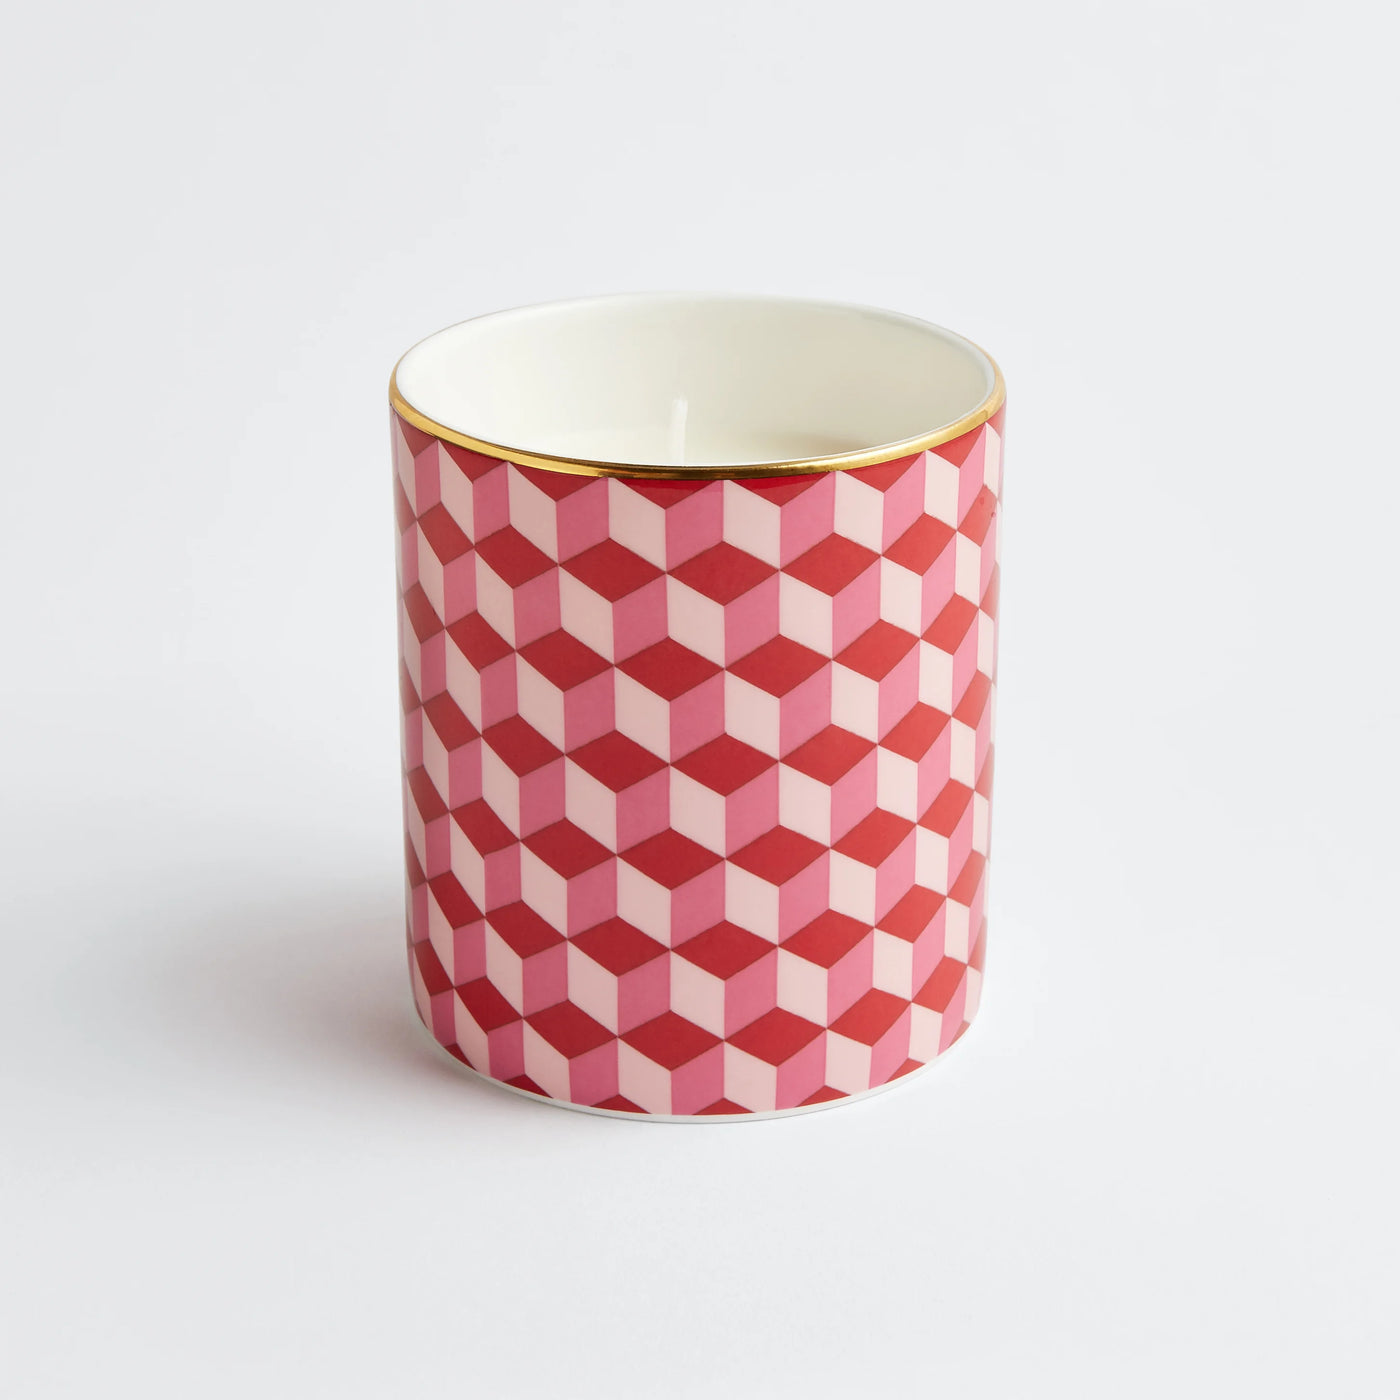 Maison Splendid fine bone china scent number eight in red/pink geometric design